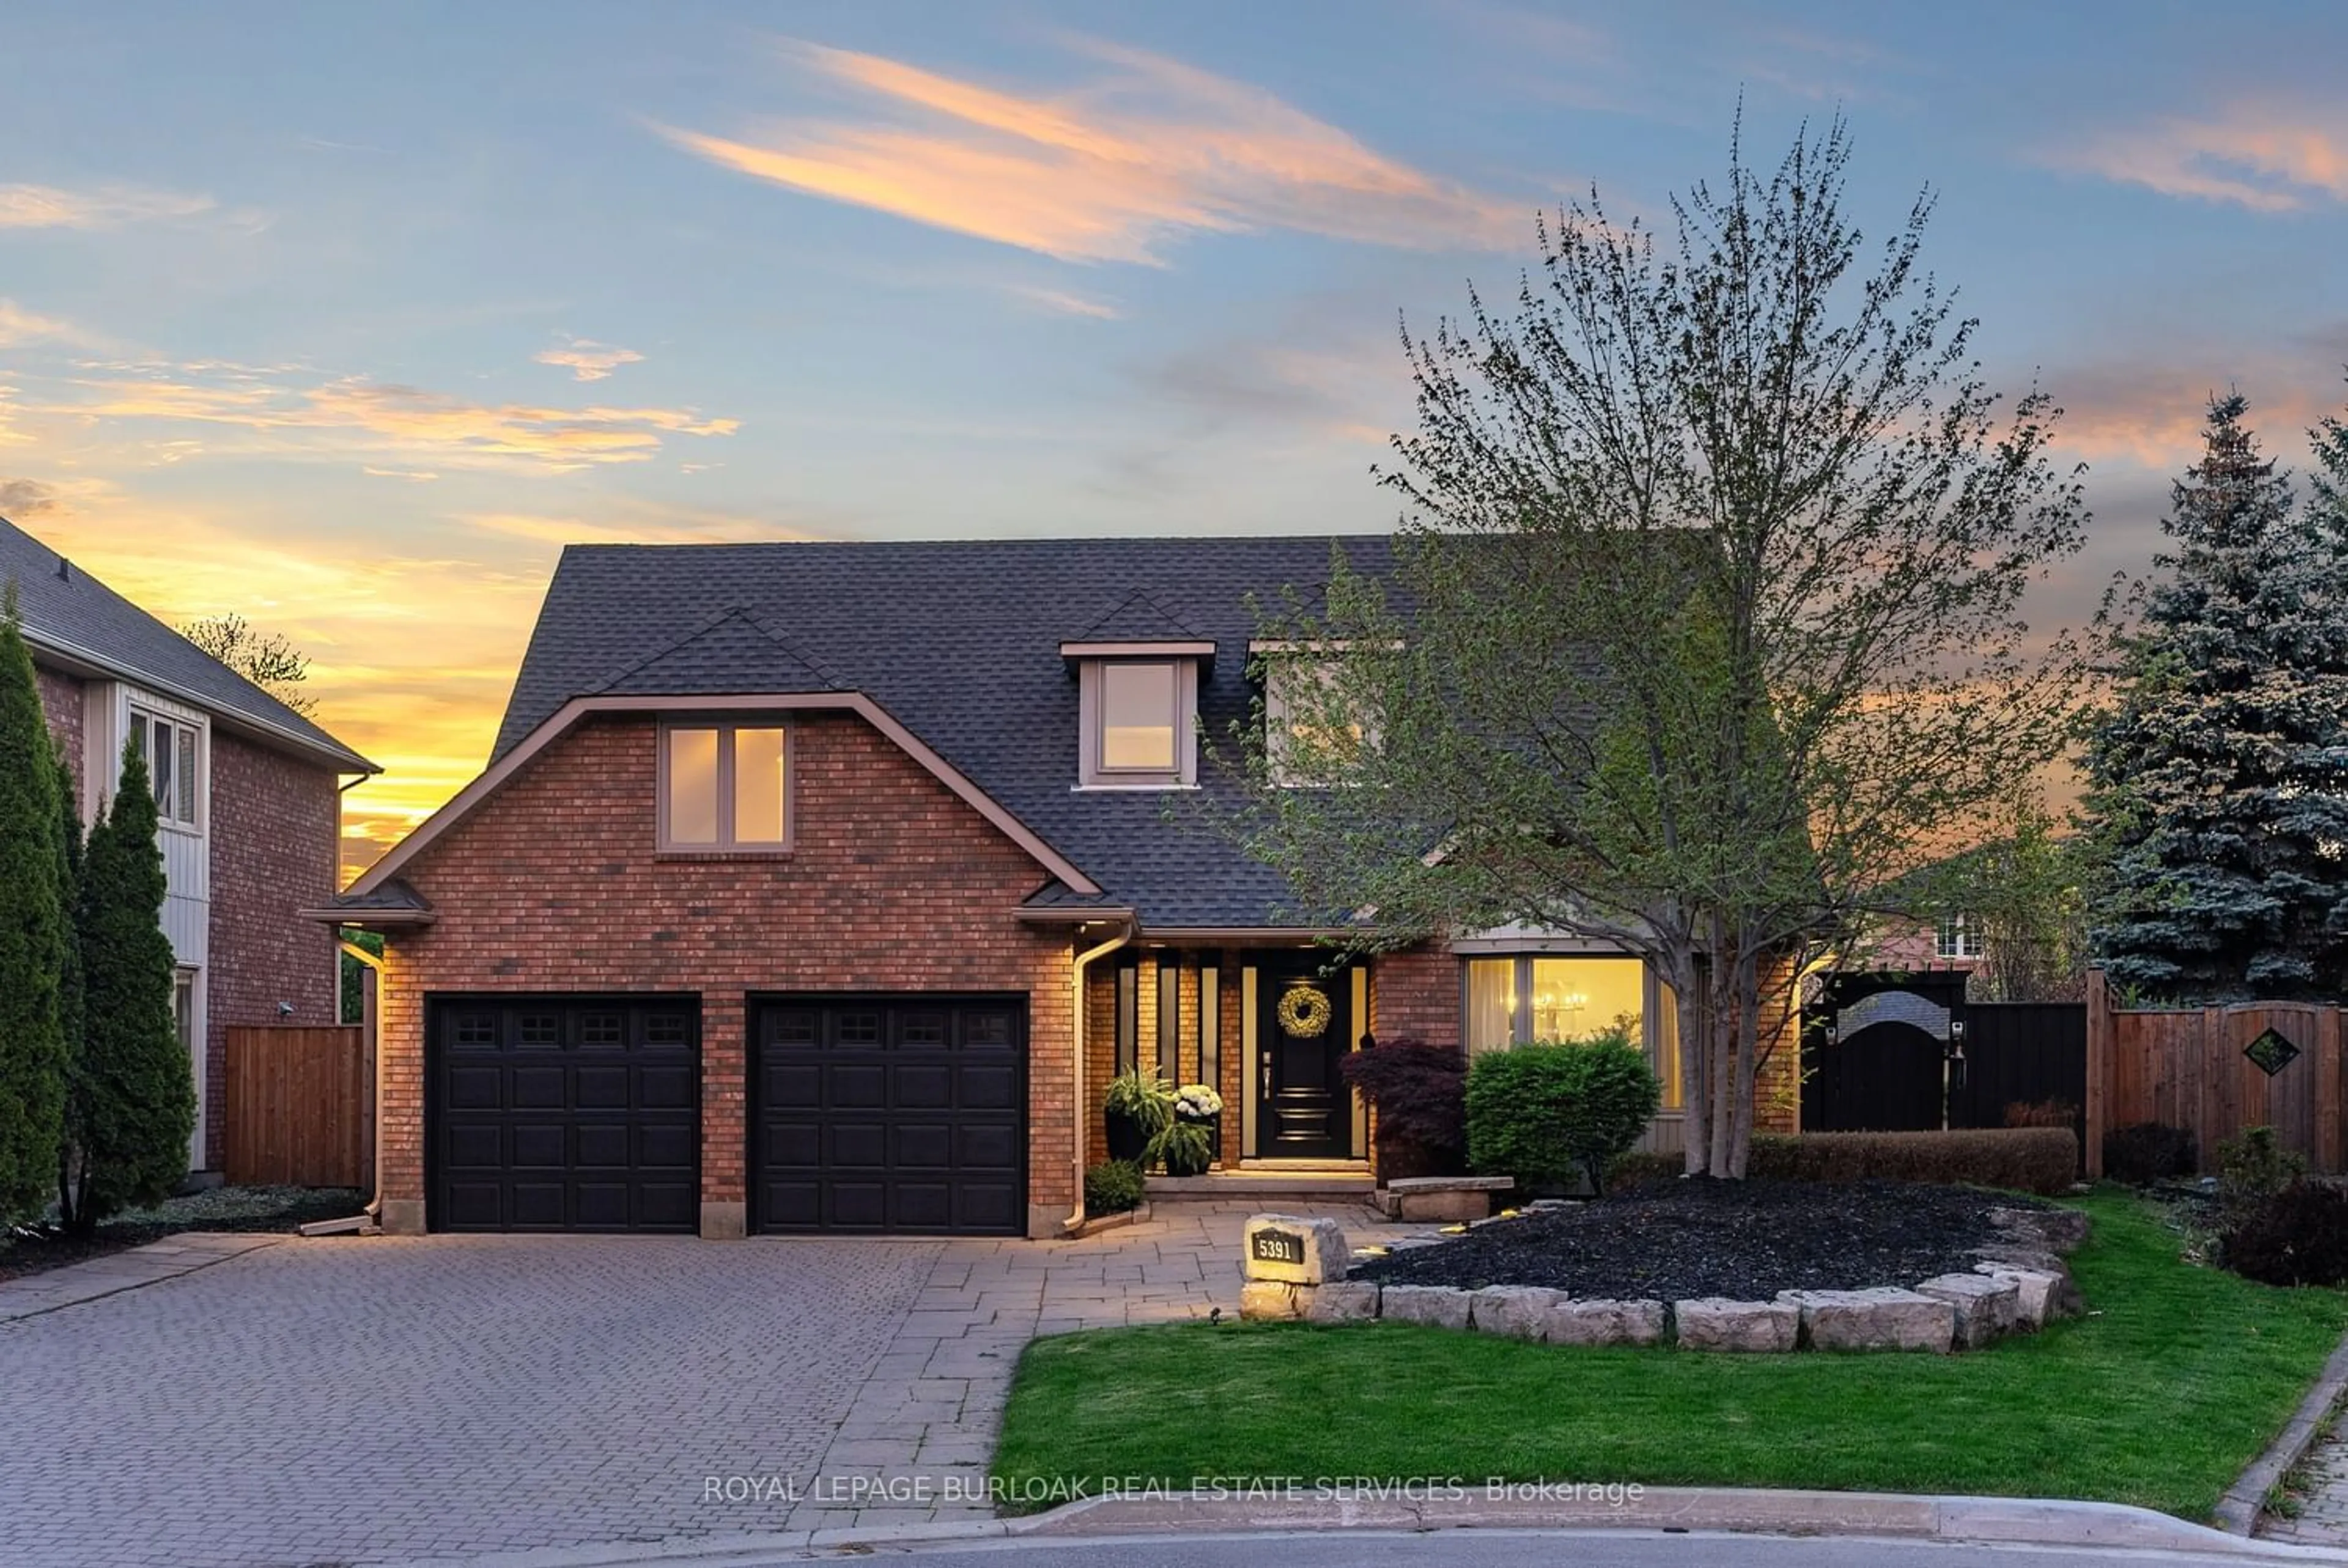 Home with brick exterior material for 5391 Linbrook Rd, Burlington Ontario L7L 3V1